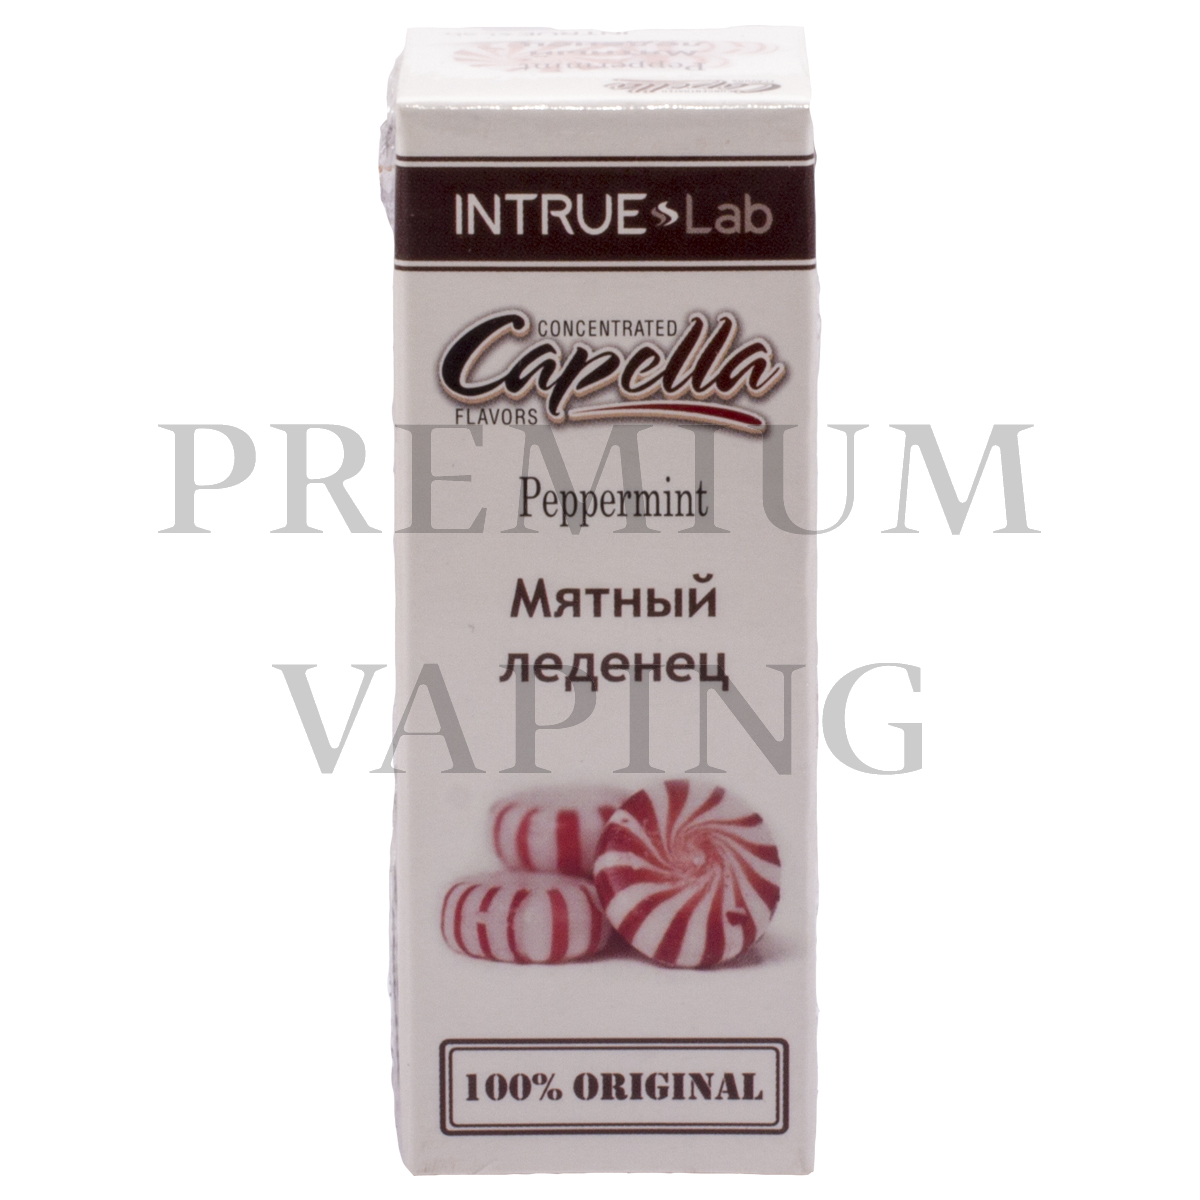 Capella-Intrue Lab — Peppermint